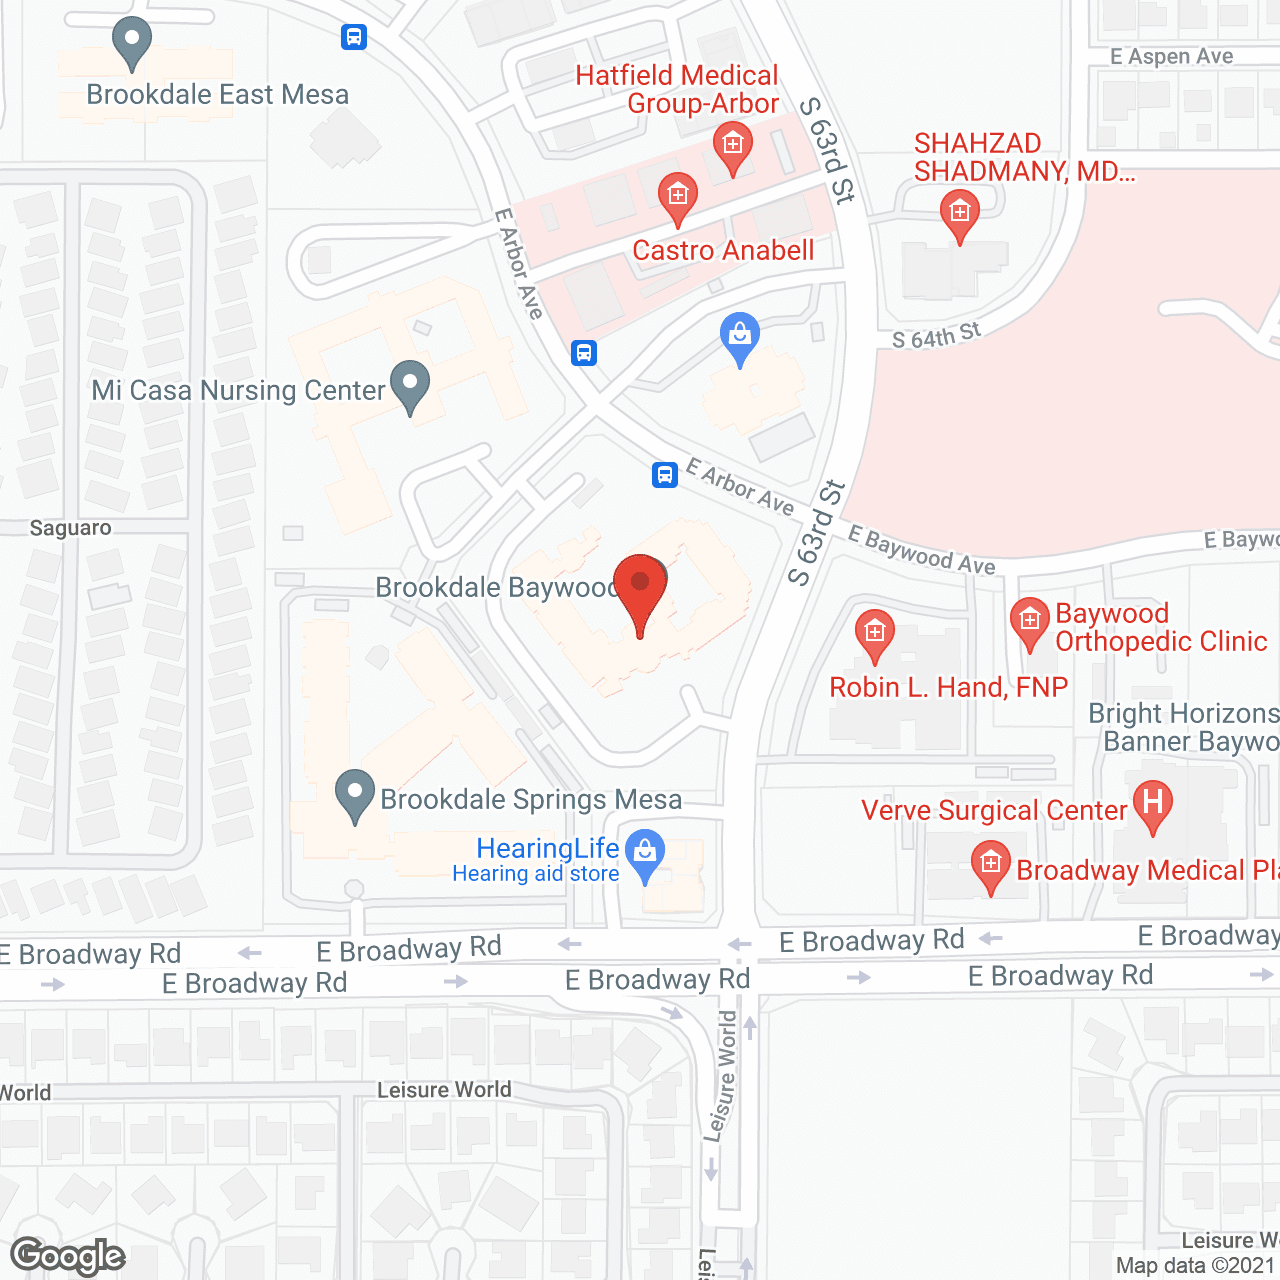 Brookdale Baywood (duplicate) in google map